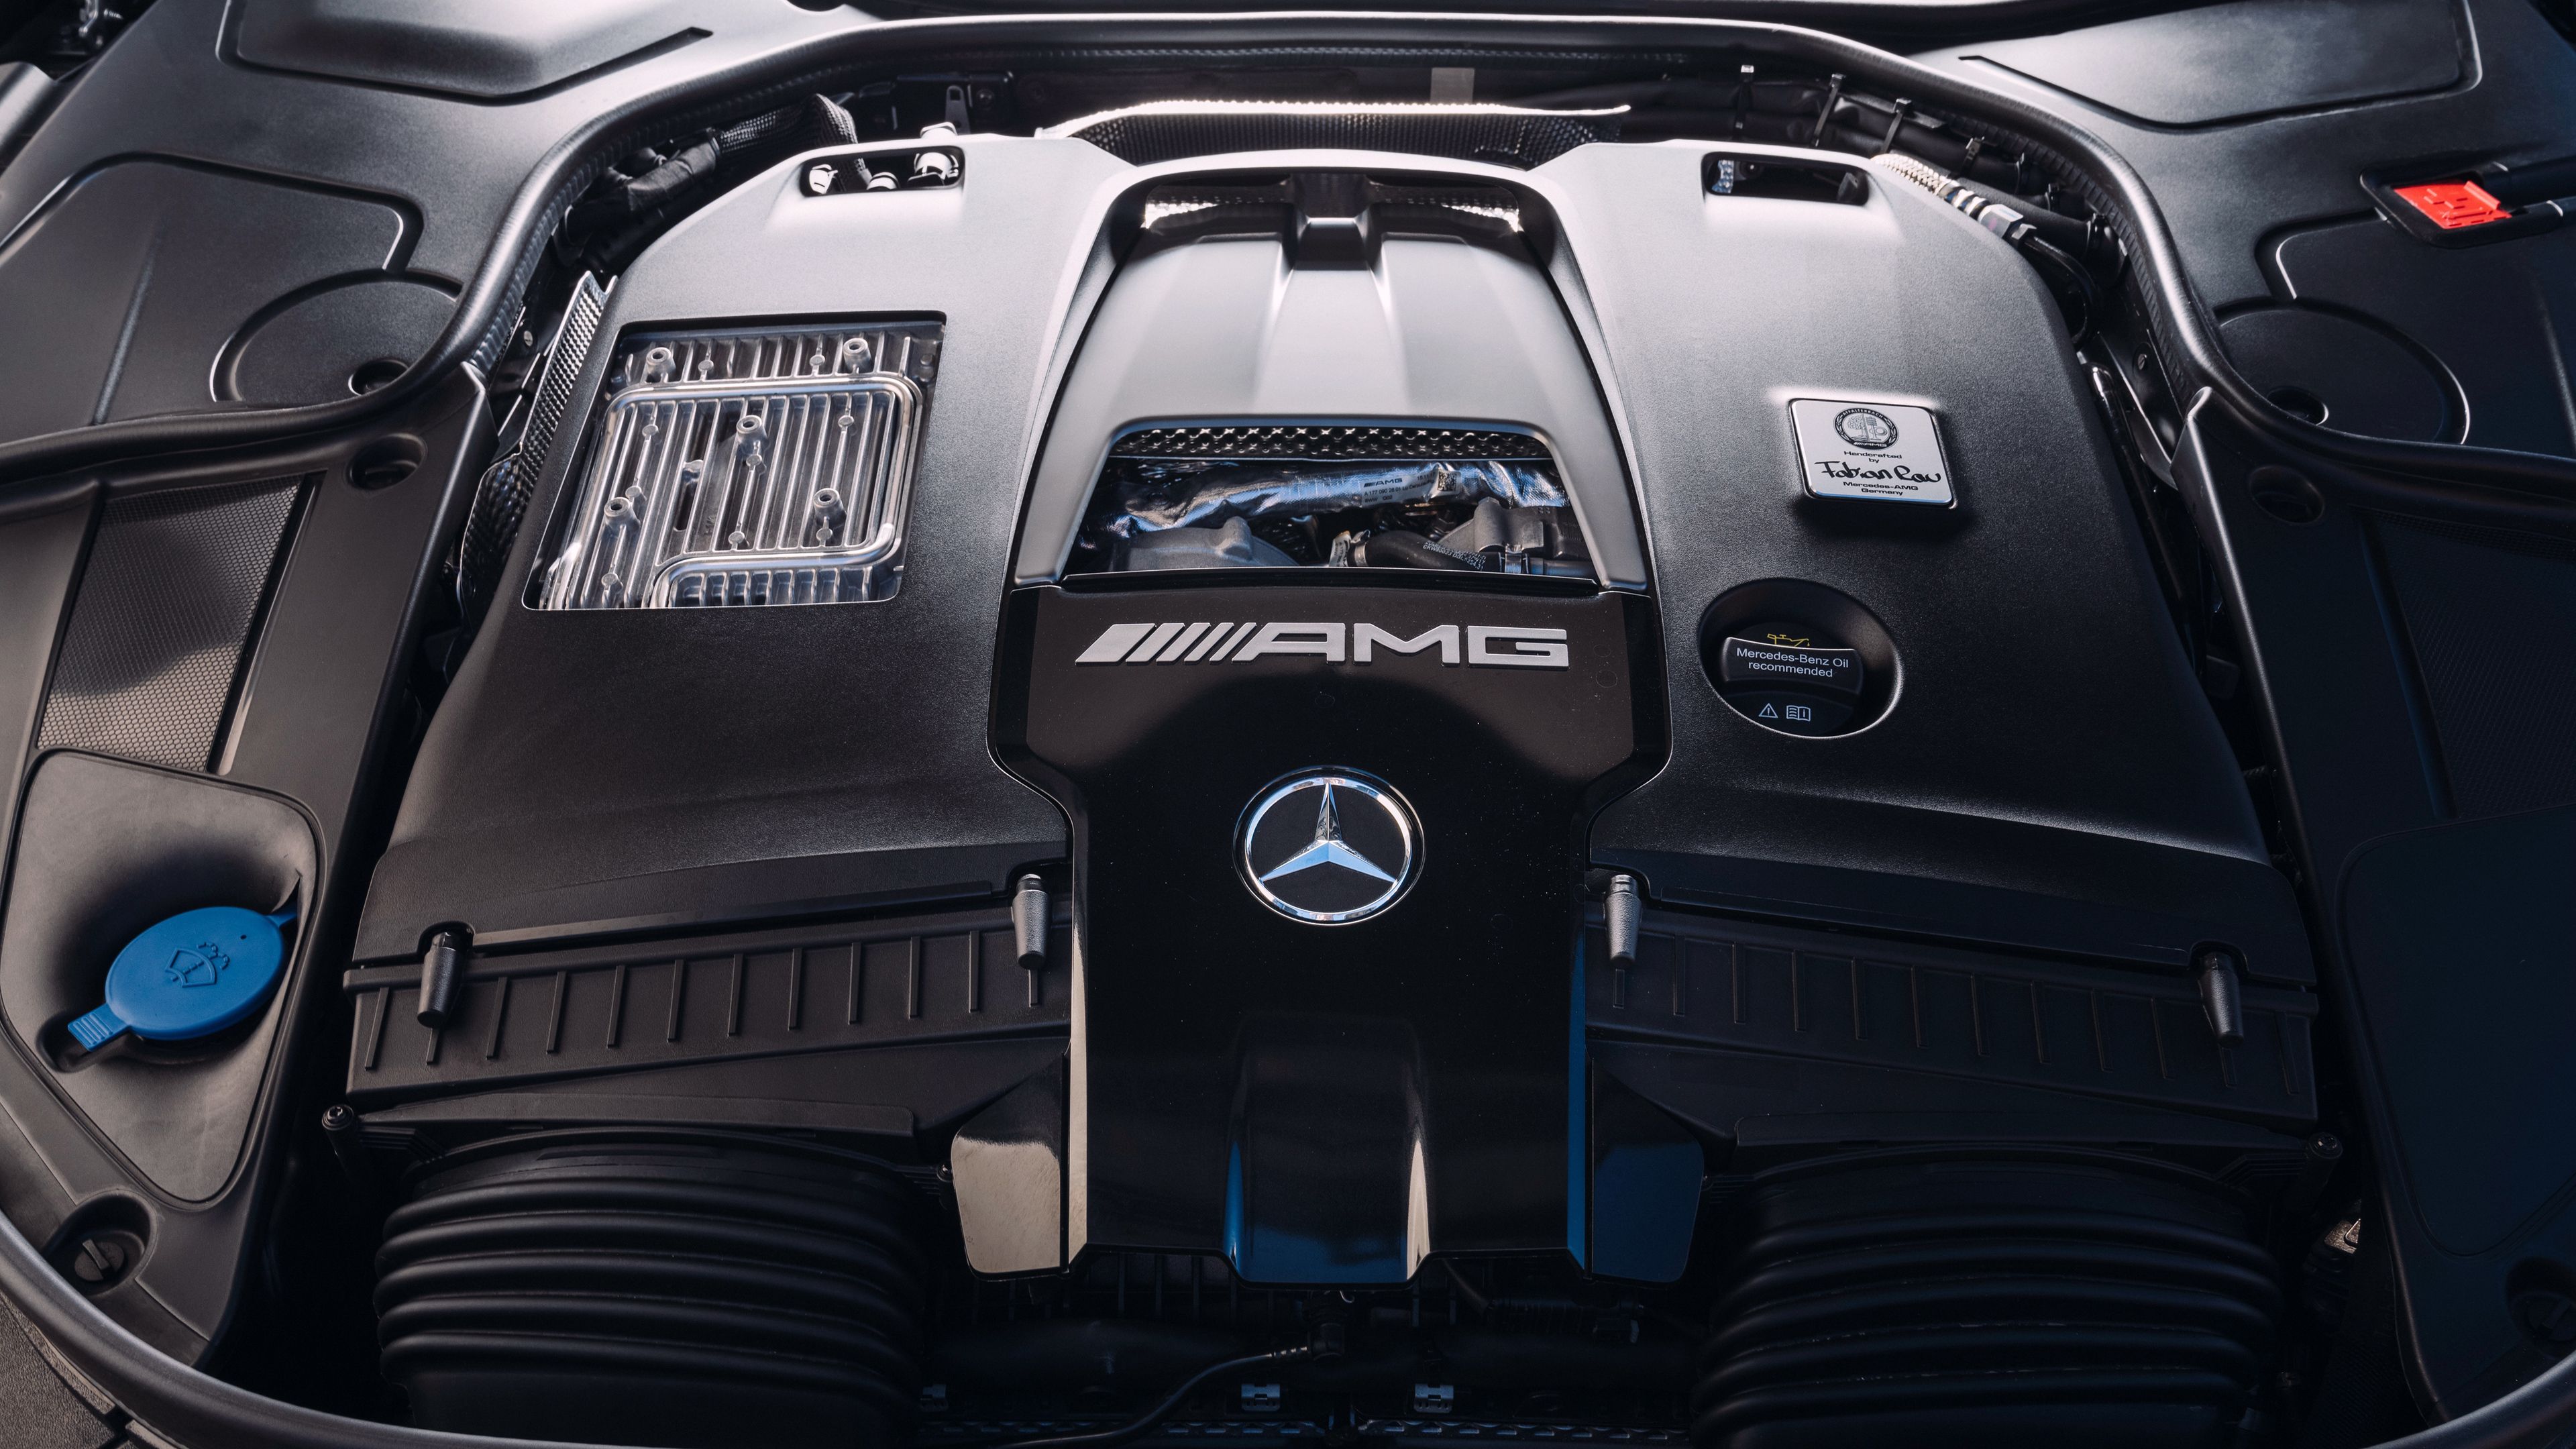 Mercedes AMG S63 2018 Engine View 4k mercedes wallpaper, mercedes s class wallpaper, mercedes benz wallpaper. Mercedes amg, Mercedes wallpaper, Mercedes s class